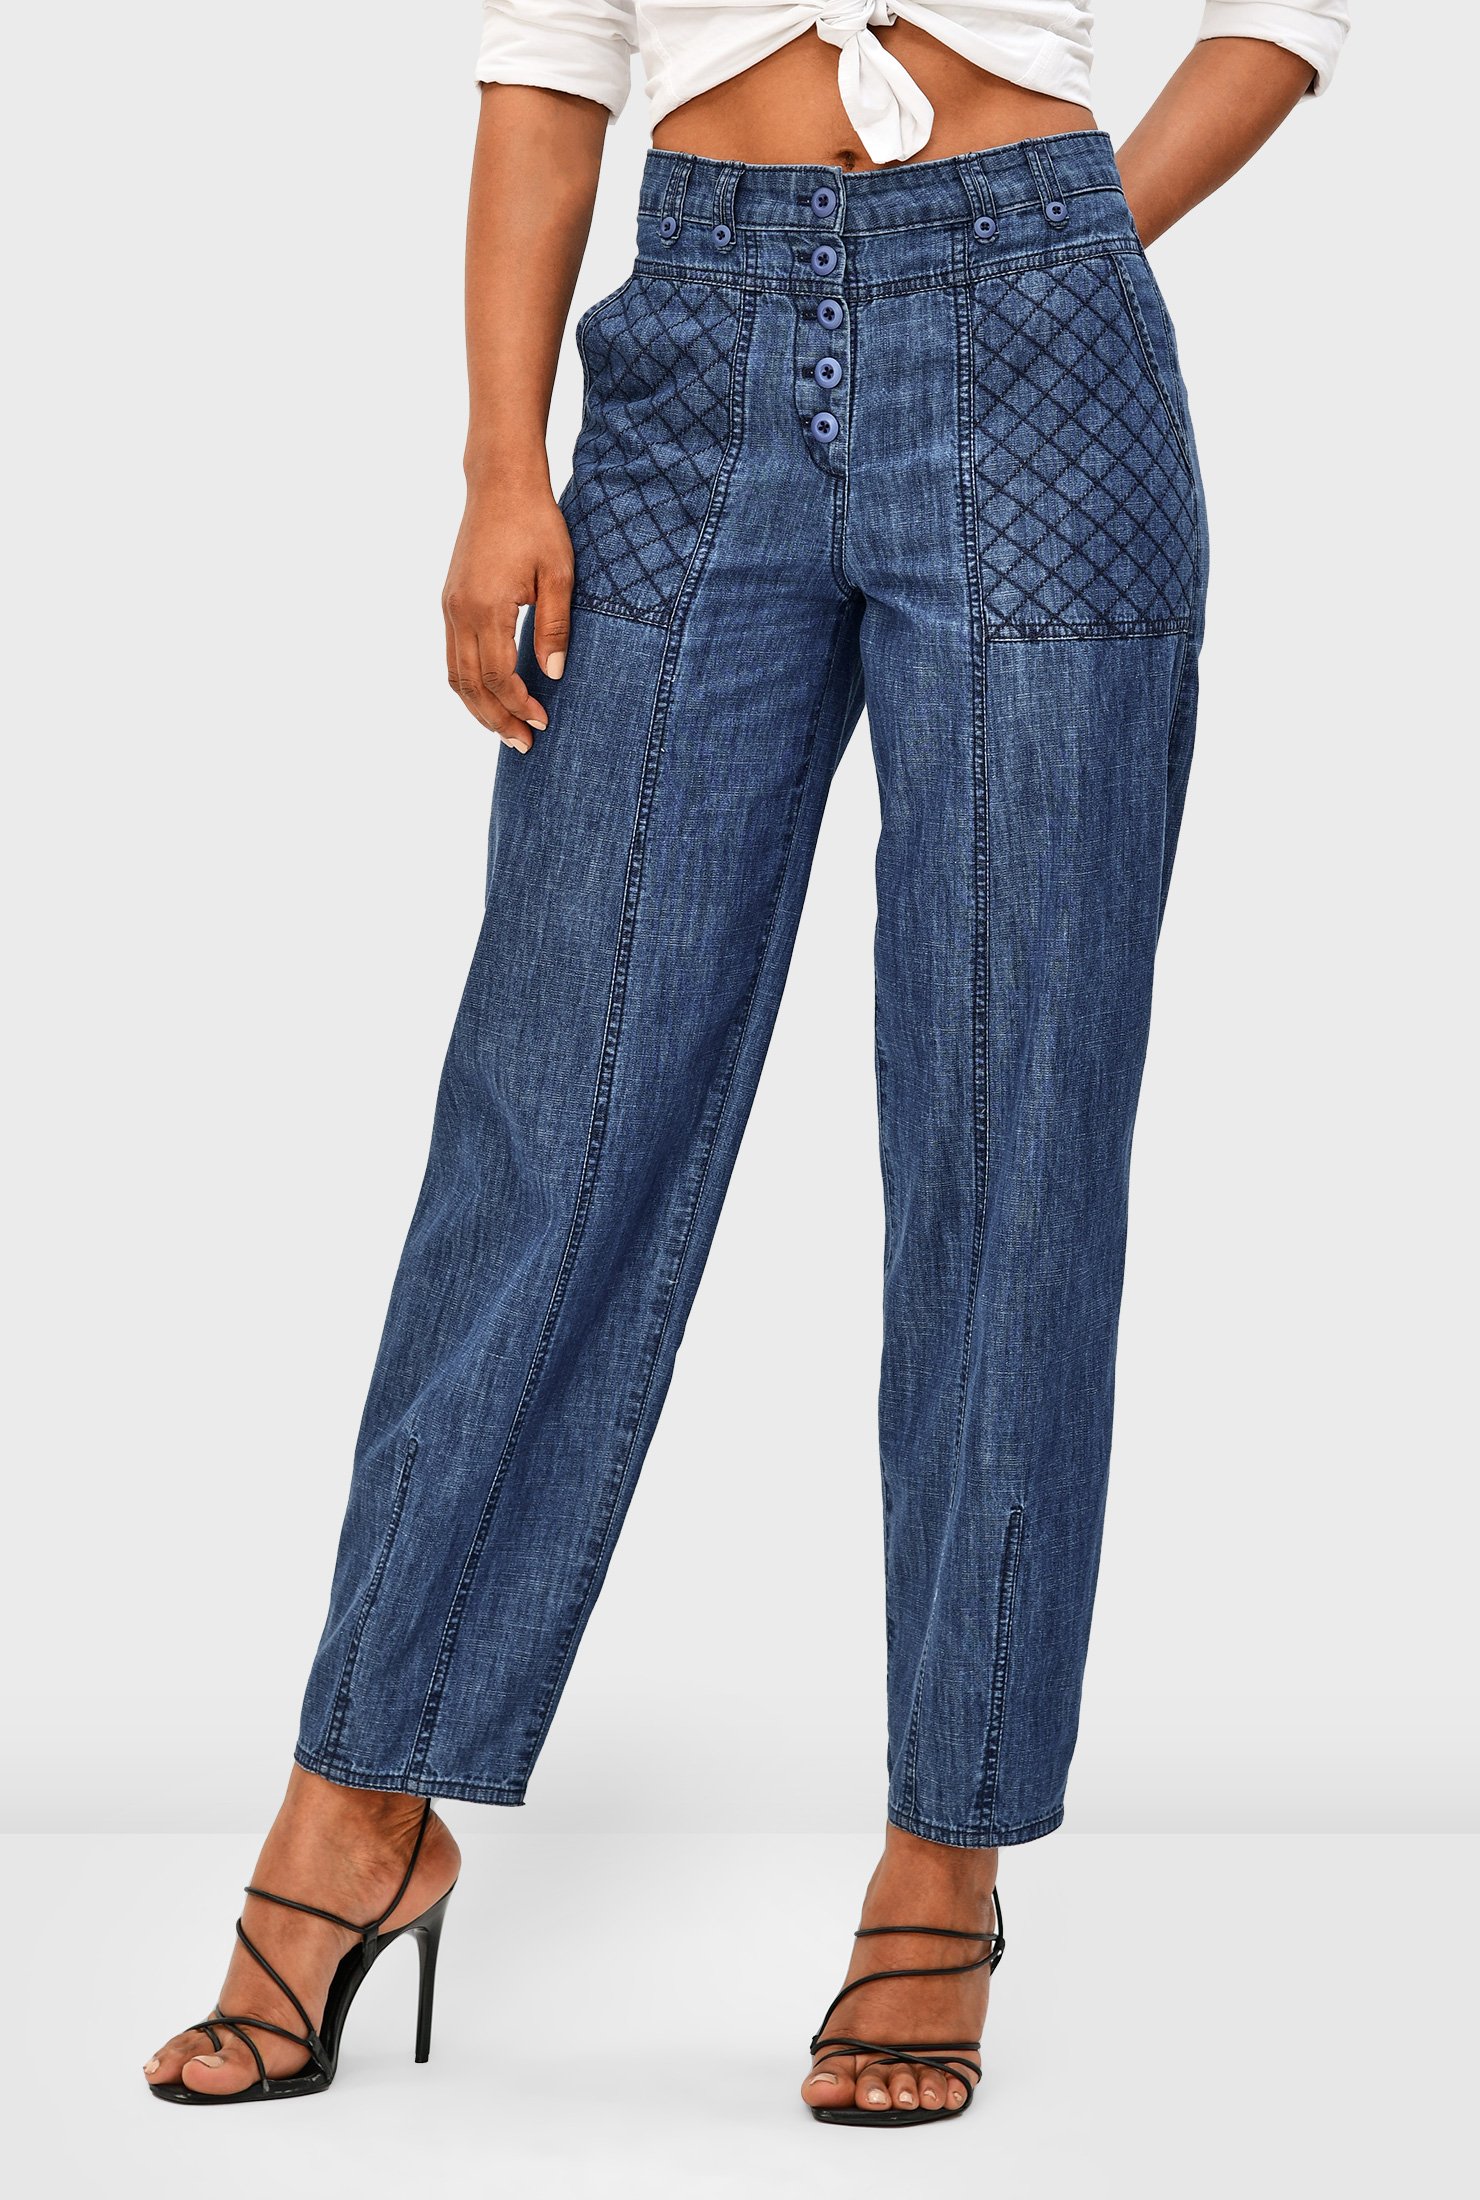 Shop waist | cotton denim jeans high fly Button eShakti